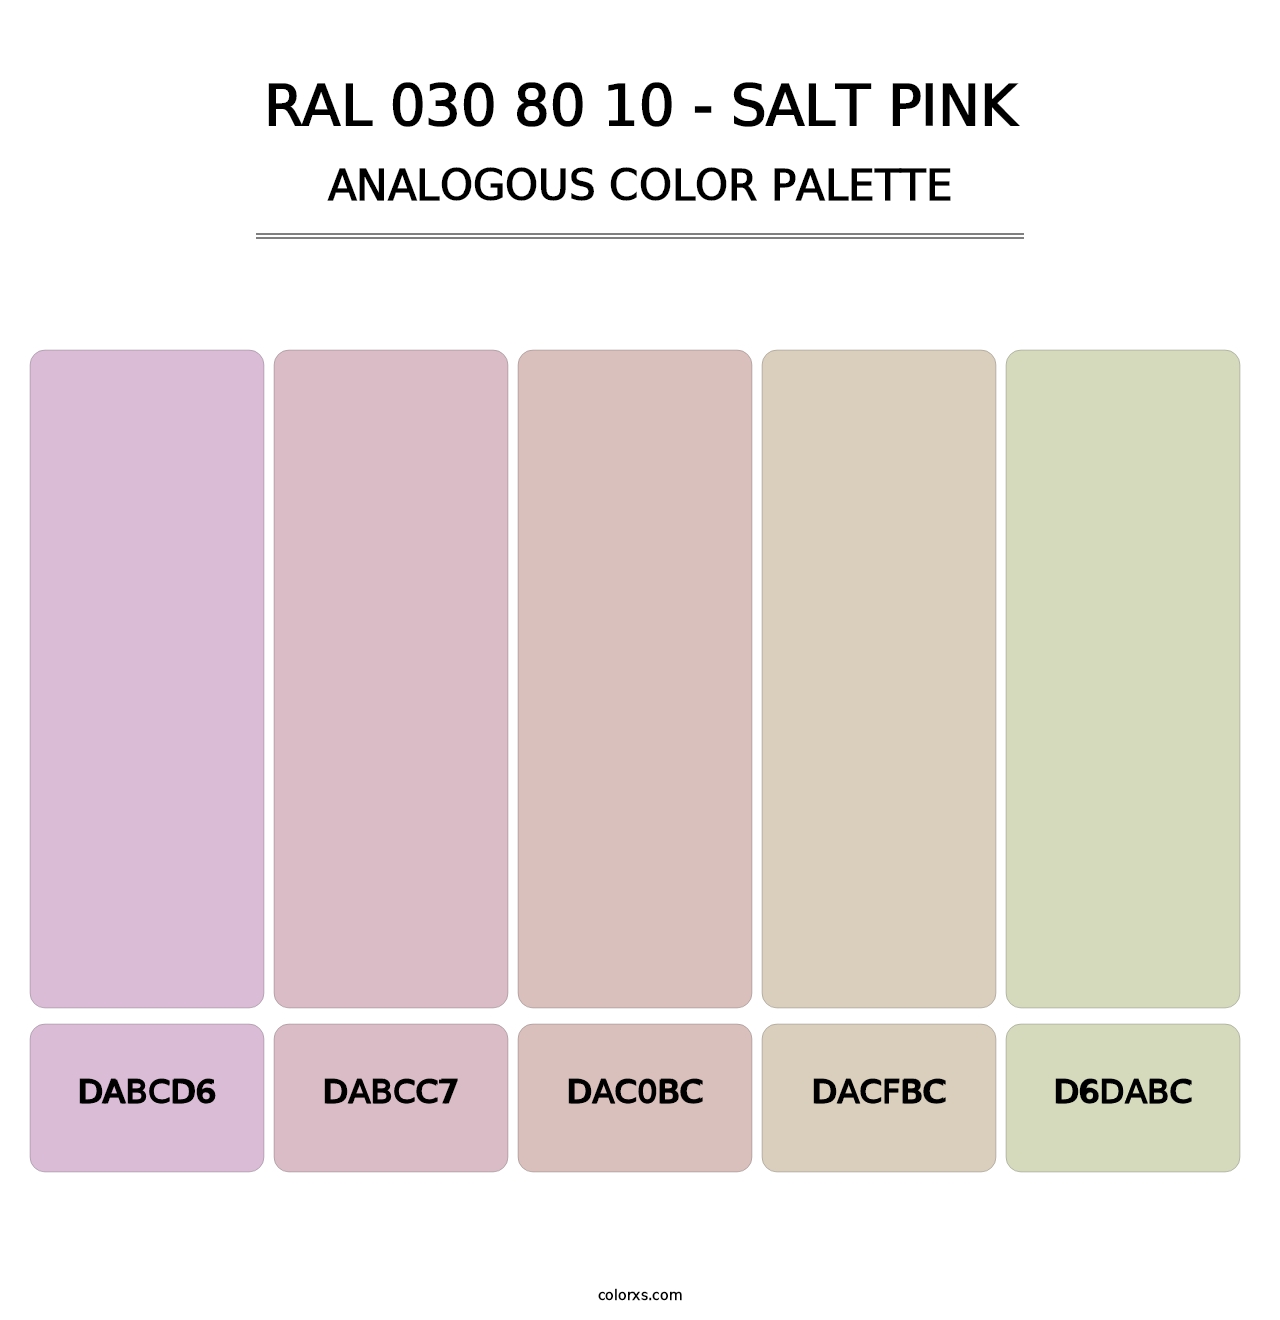 RAL 030 80 10 - Salt Pink - Analogous Color Palette